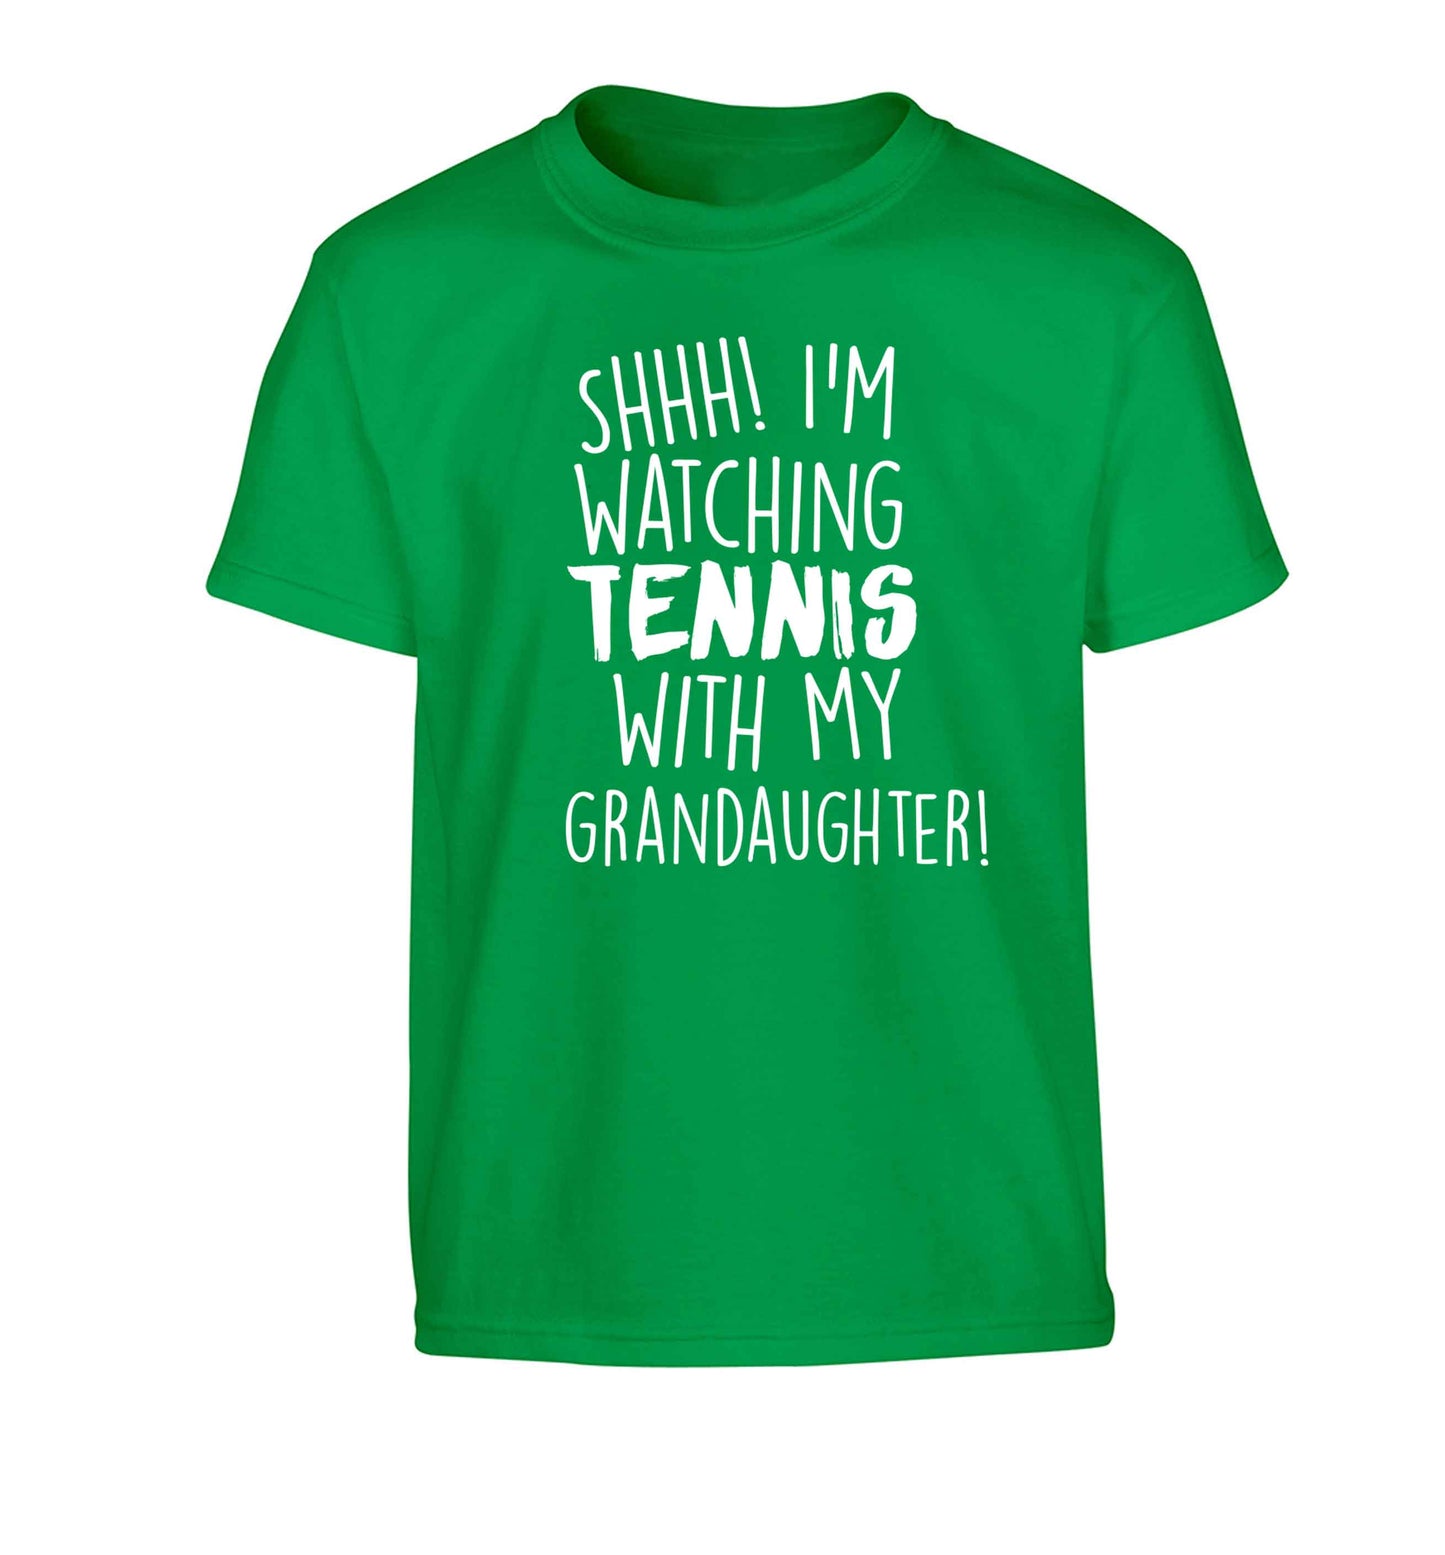 Shh! I'm watching tennis with my granddaughter! Children's green Tshirt 12-13 Years